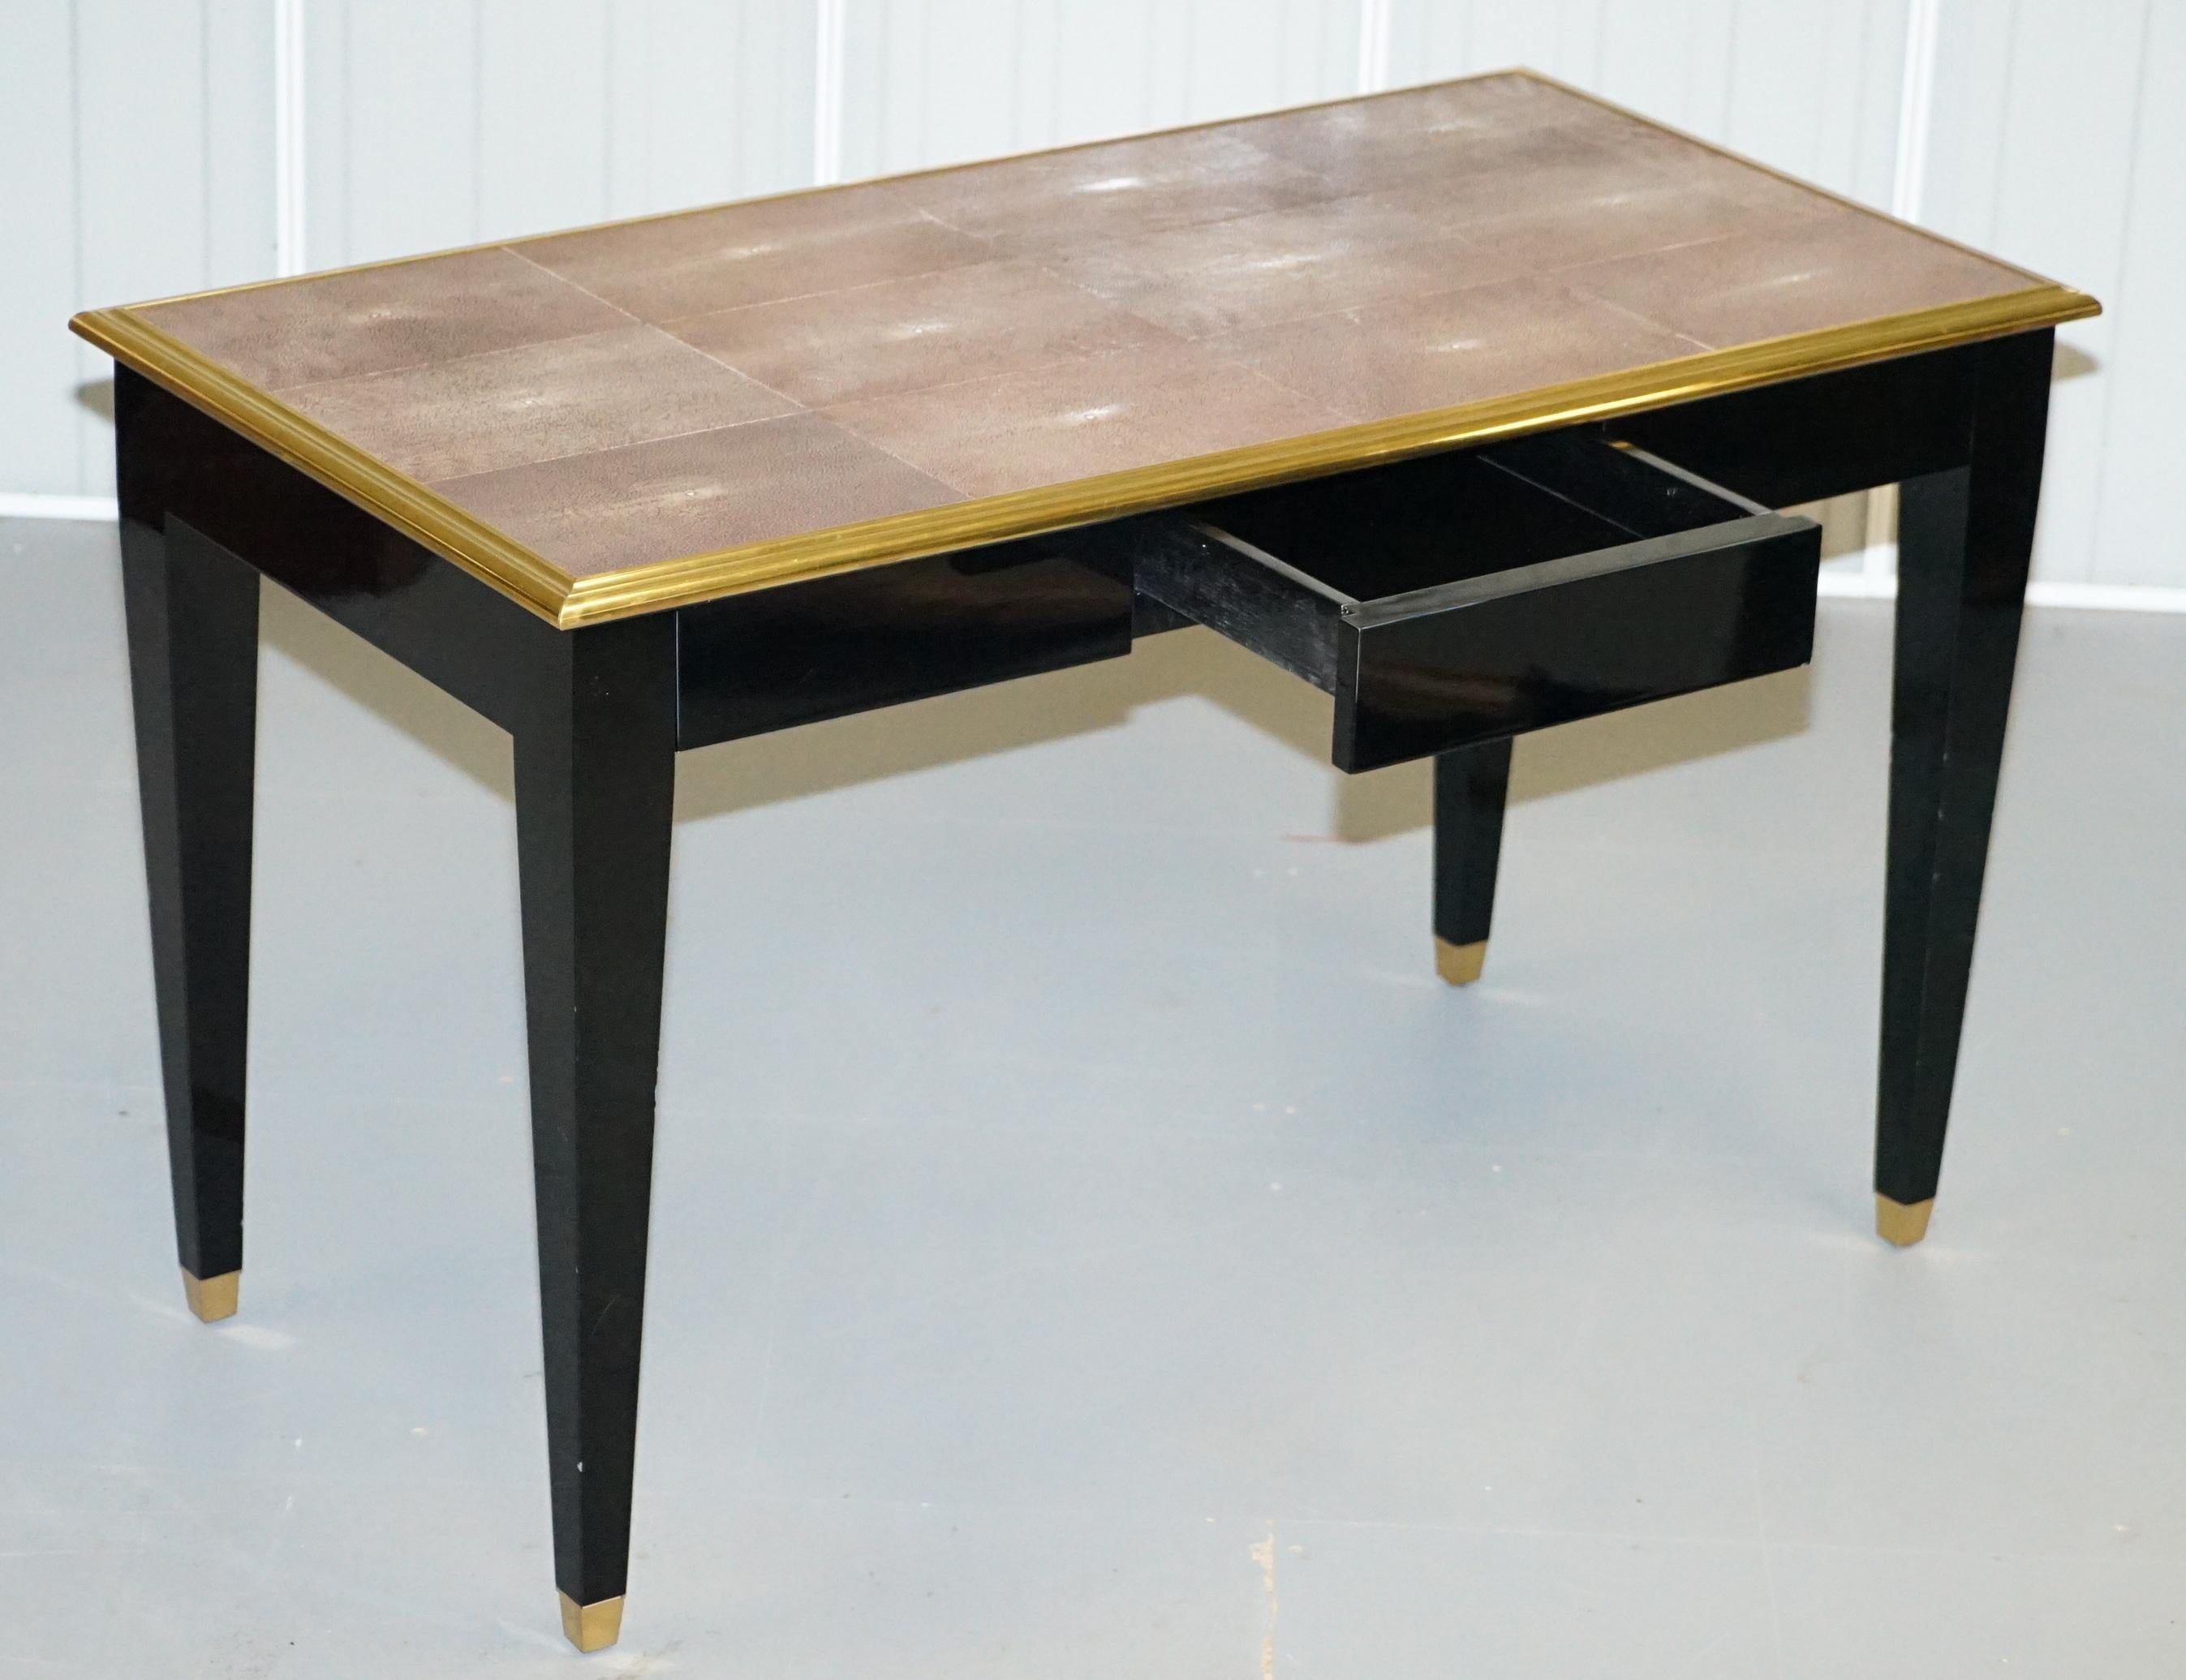 Original Shagreen Gilt Metal Writing Table Desk with Single-Drawer For Sale 10